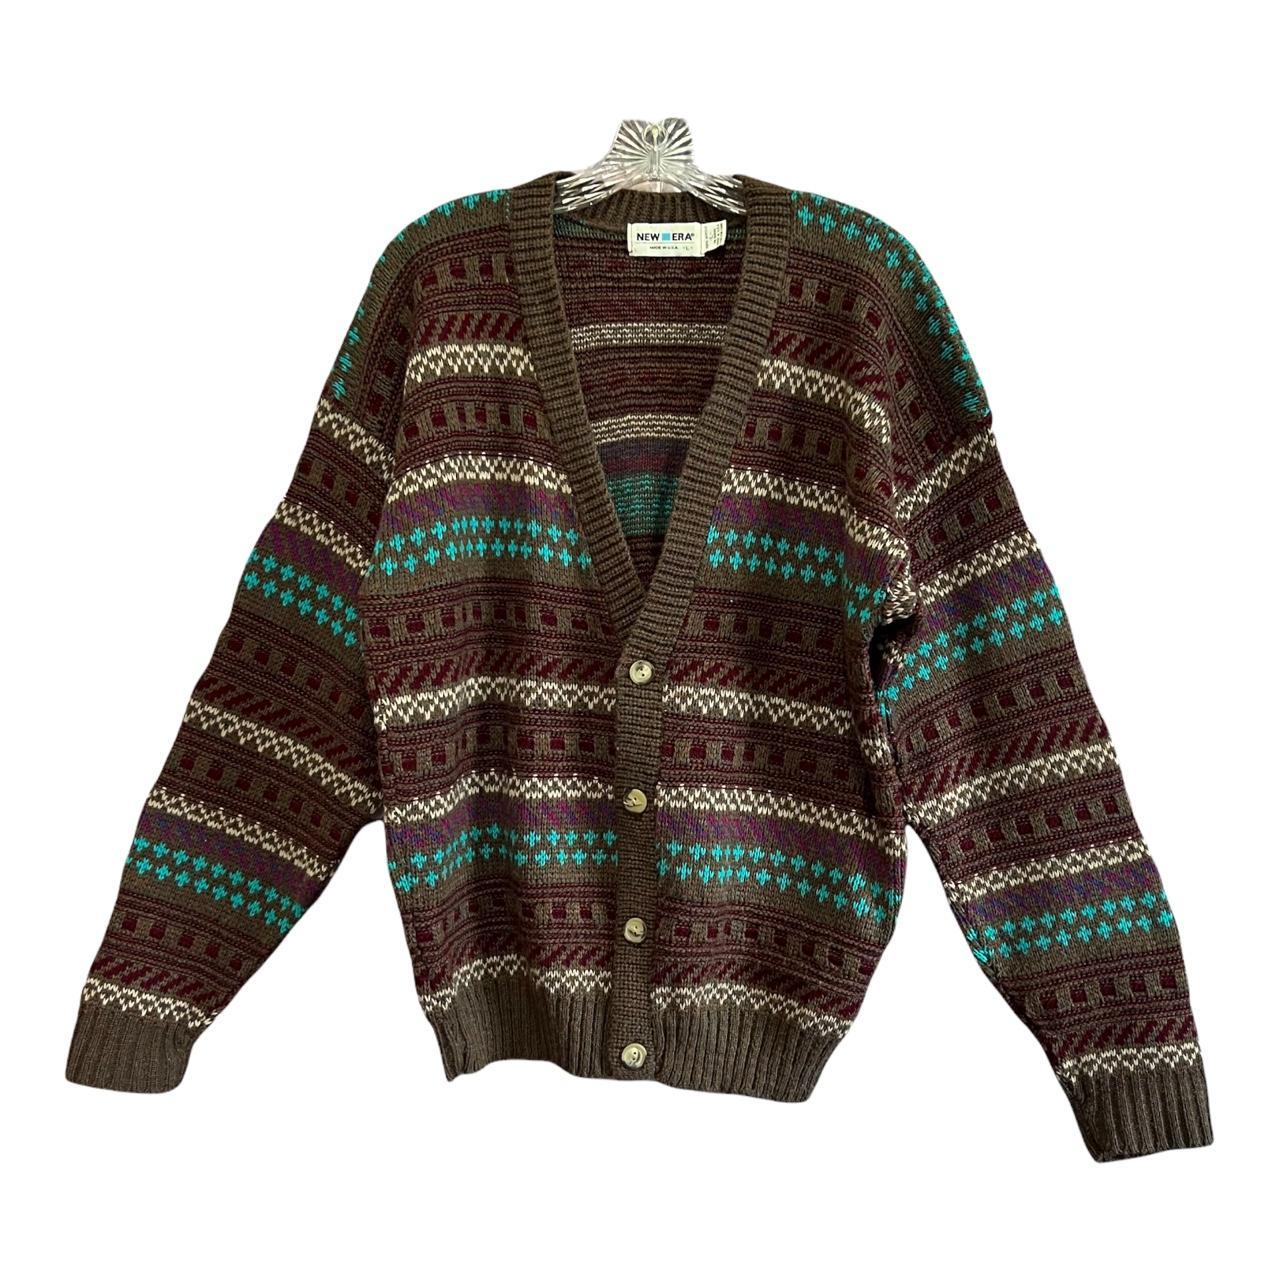 Vintage 80s Oversized Grandpa Cardigan Sweater in a... - Depop